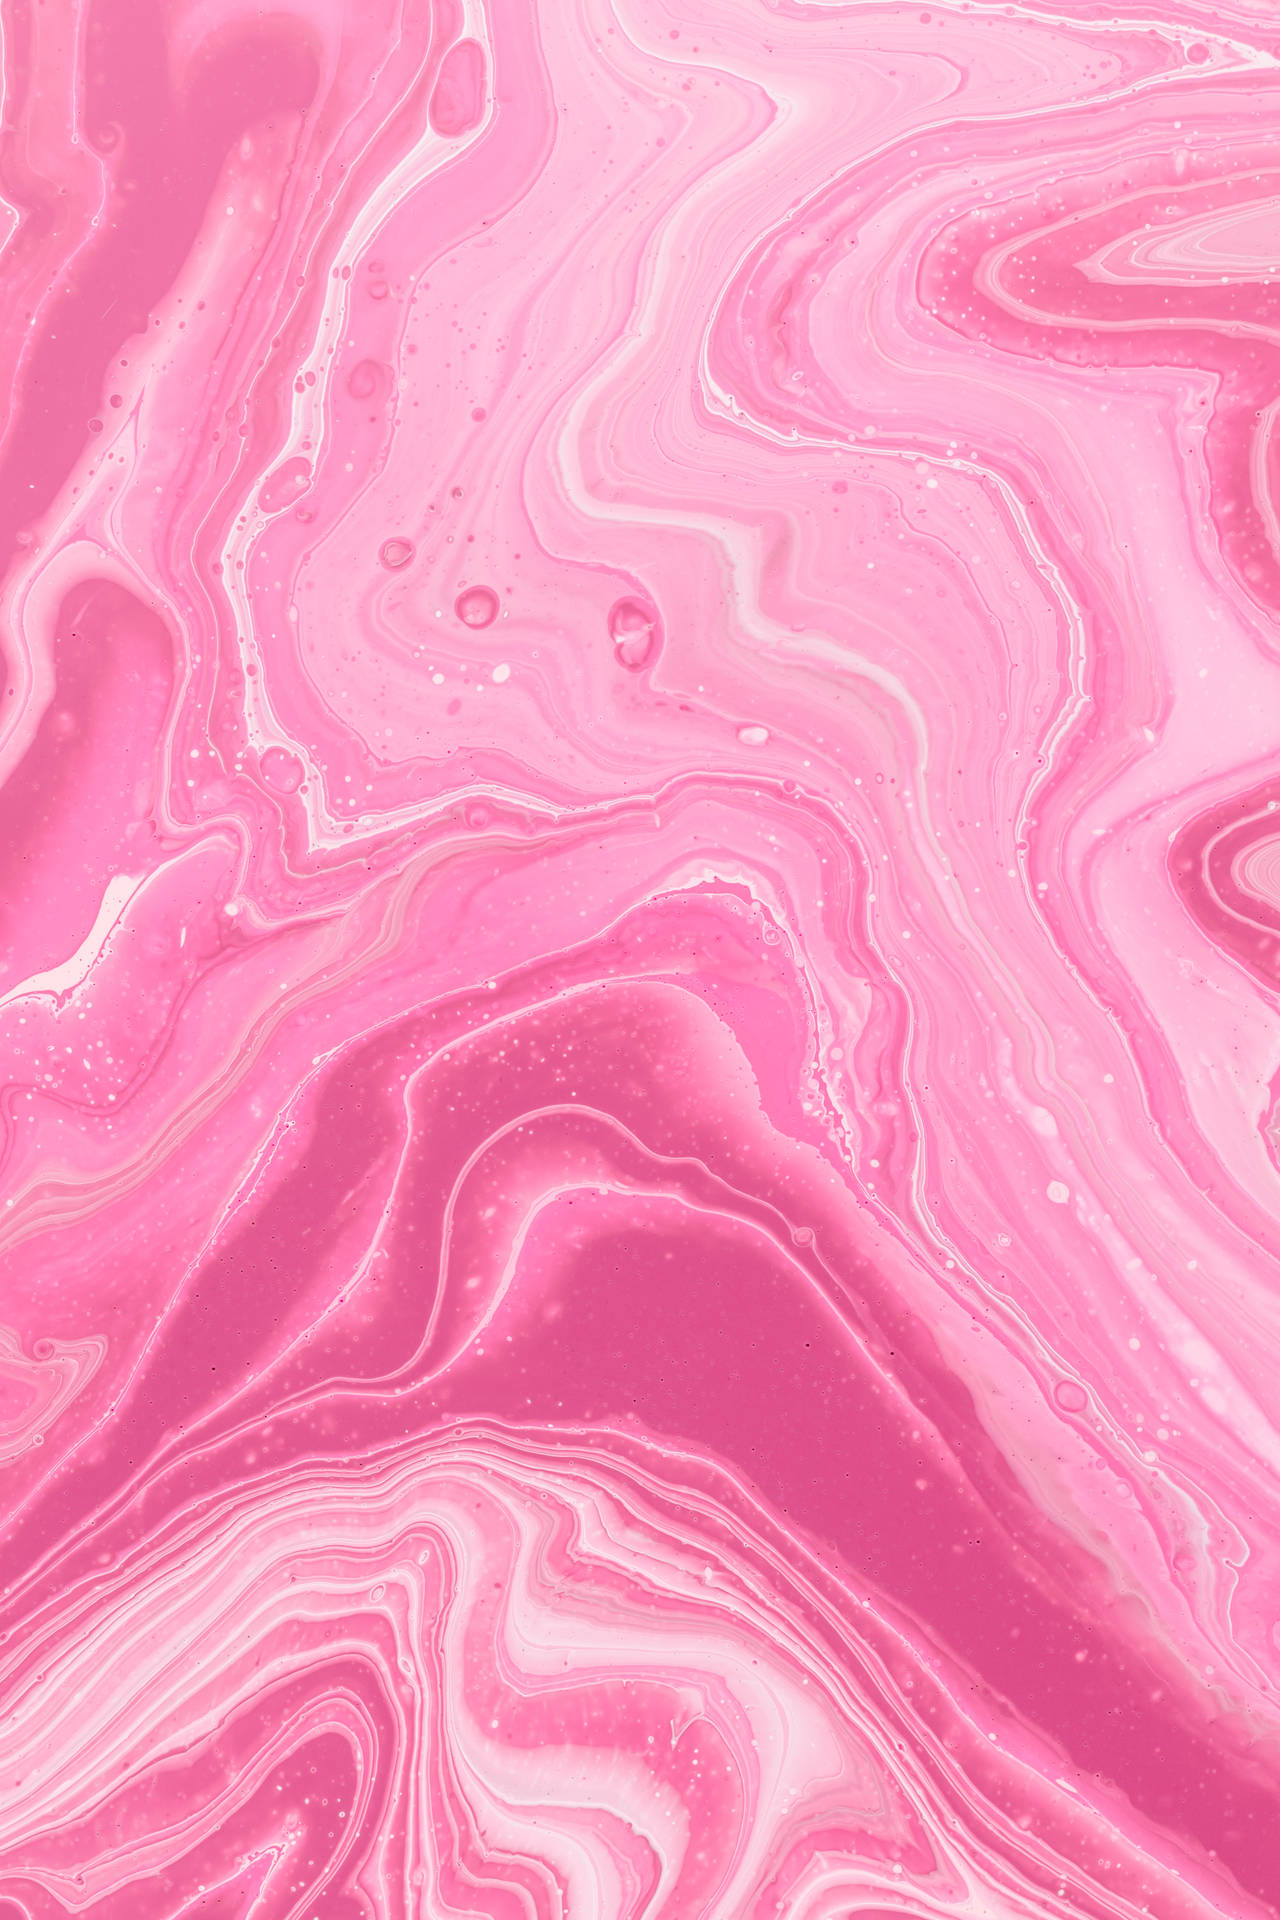 Endearing Light Pink Color Wallpaper